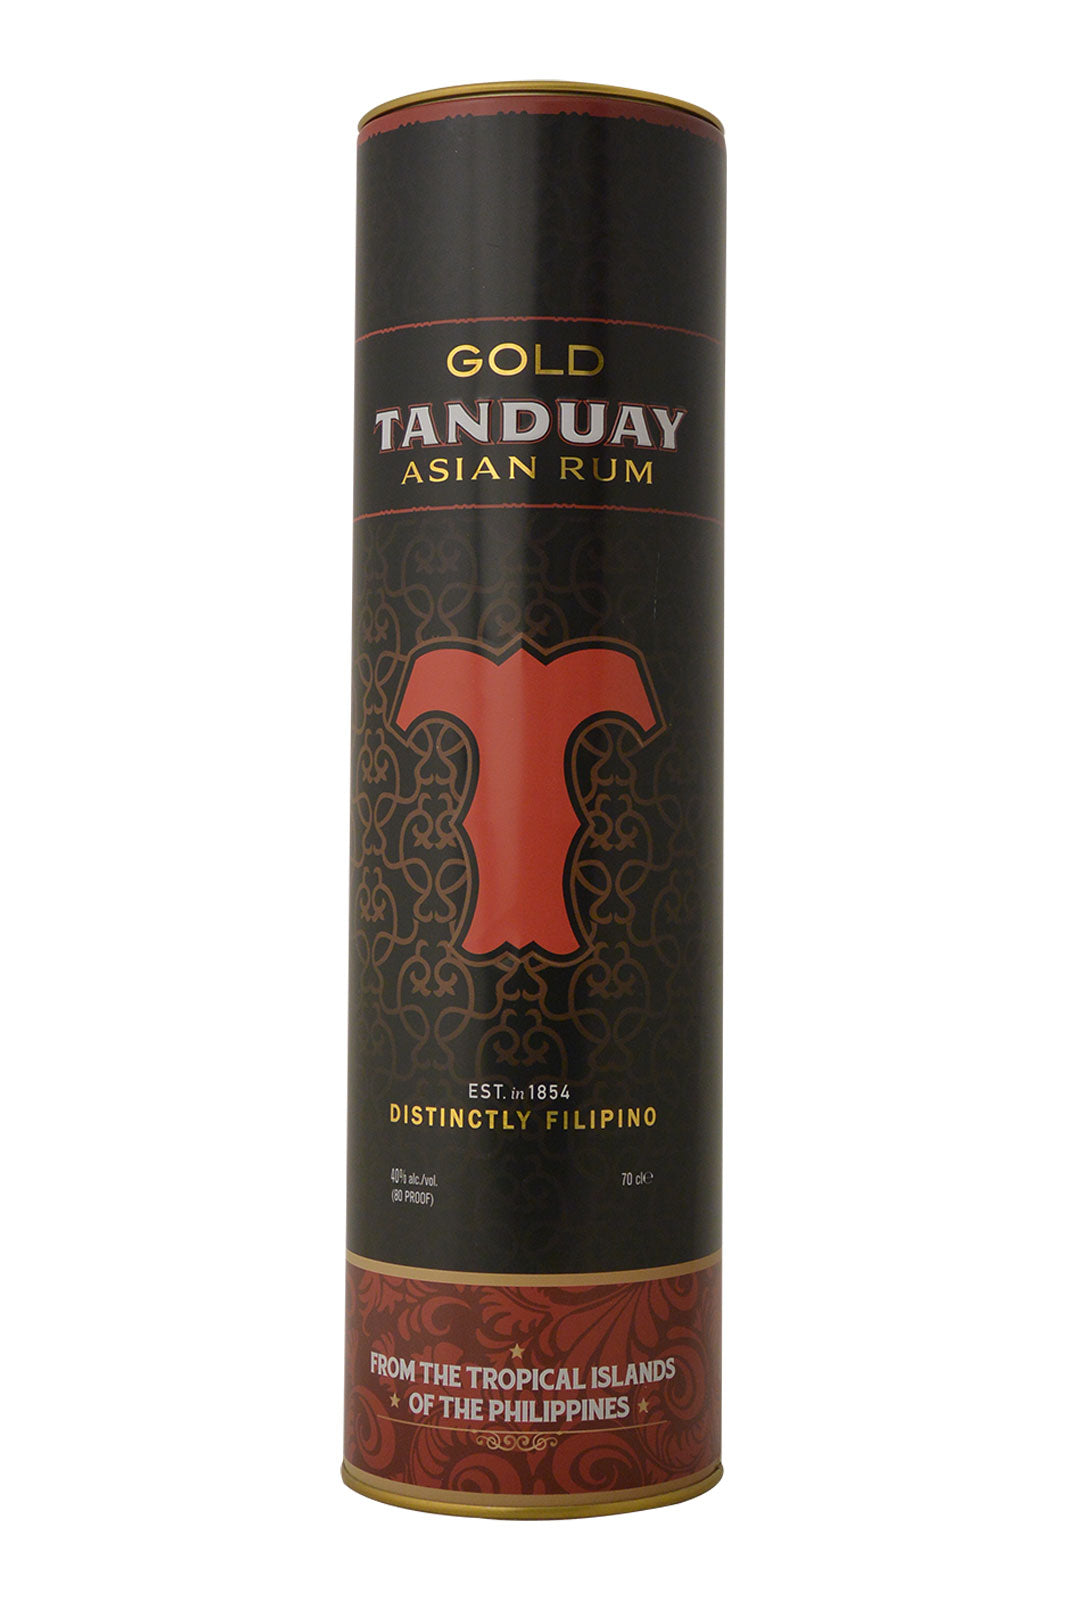 Tanduay Golden Asian Rum